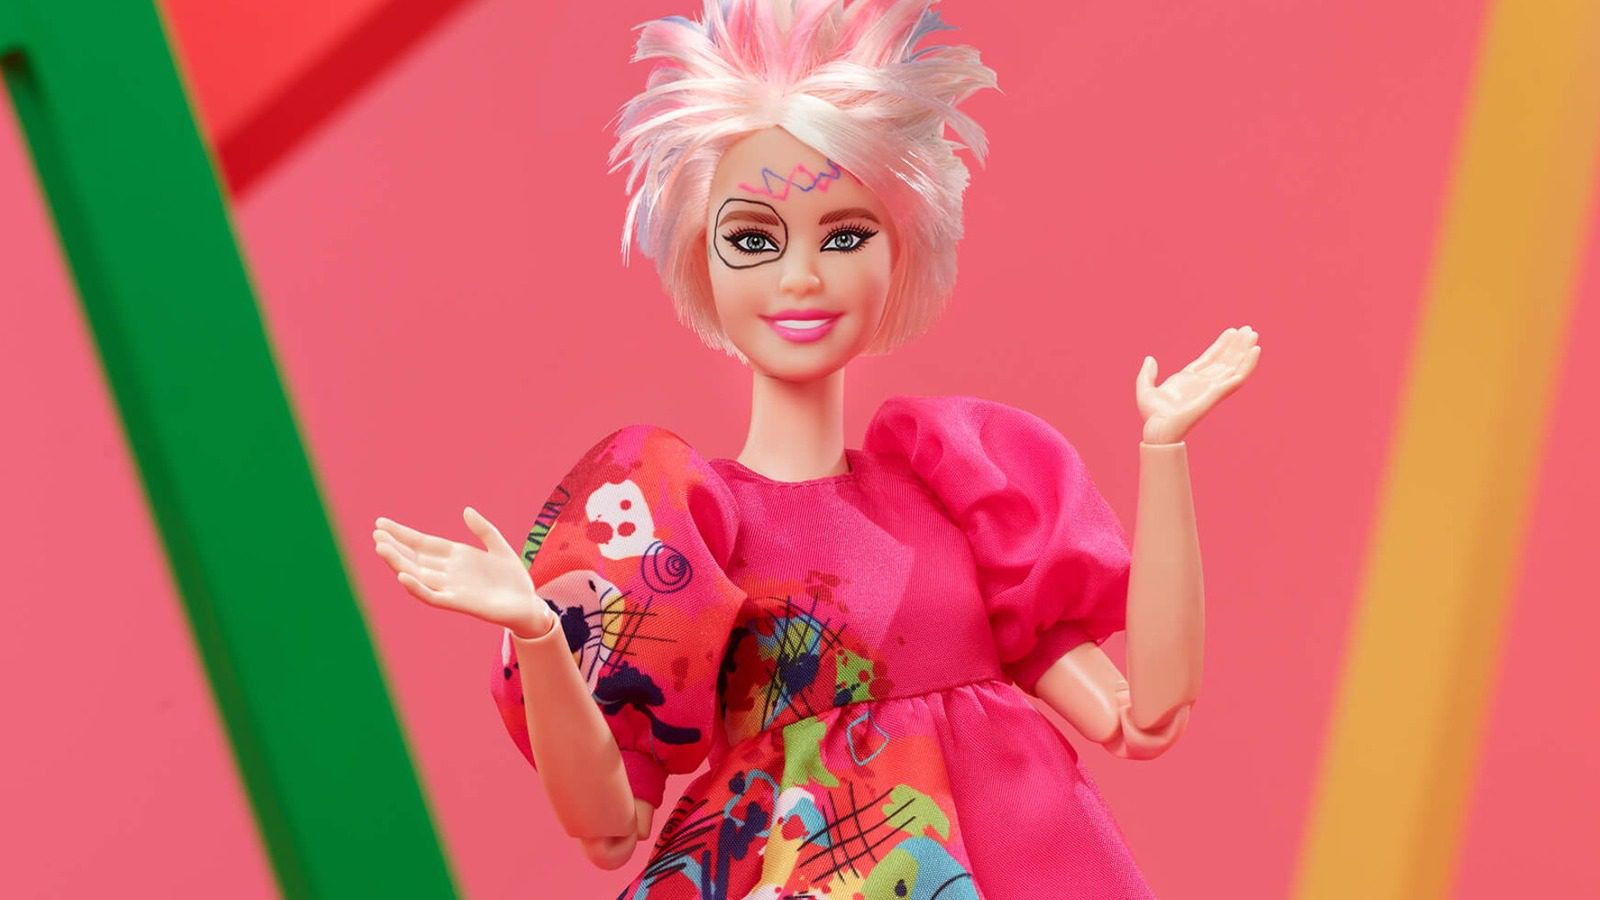 Mattel Releases New Kate McKinnon 'Weird' Barbie Doll